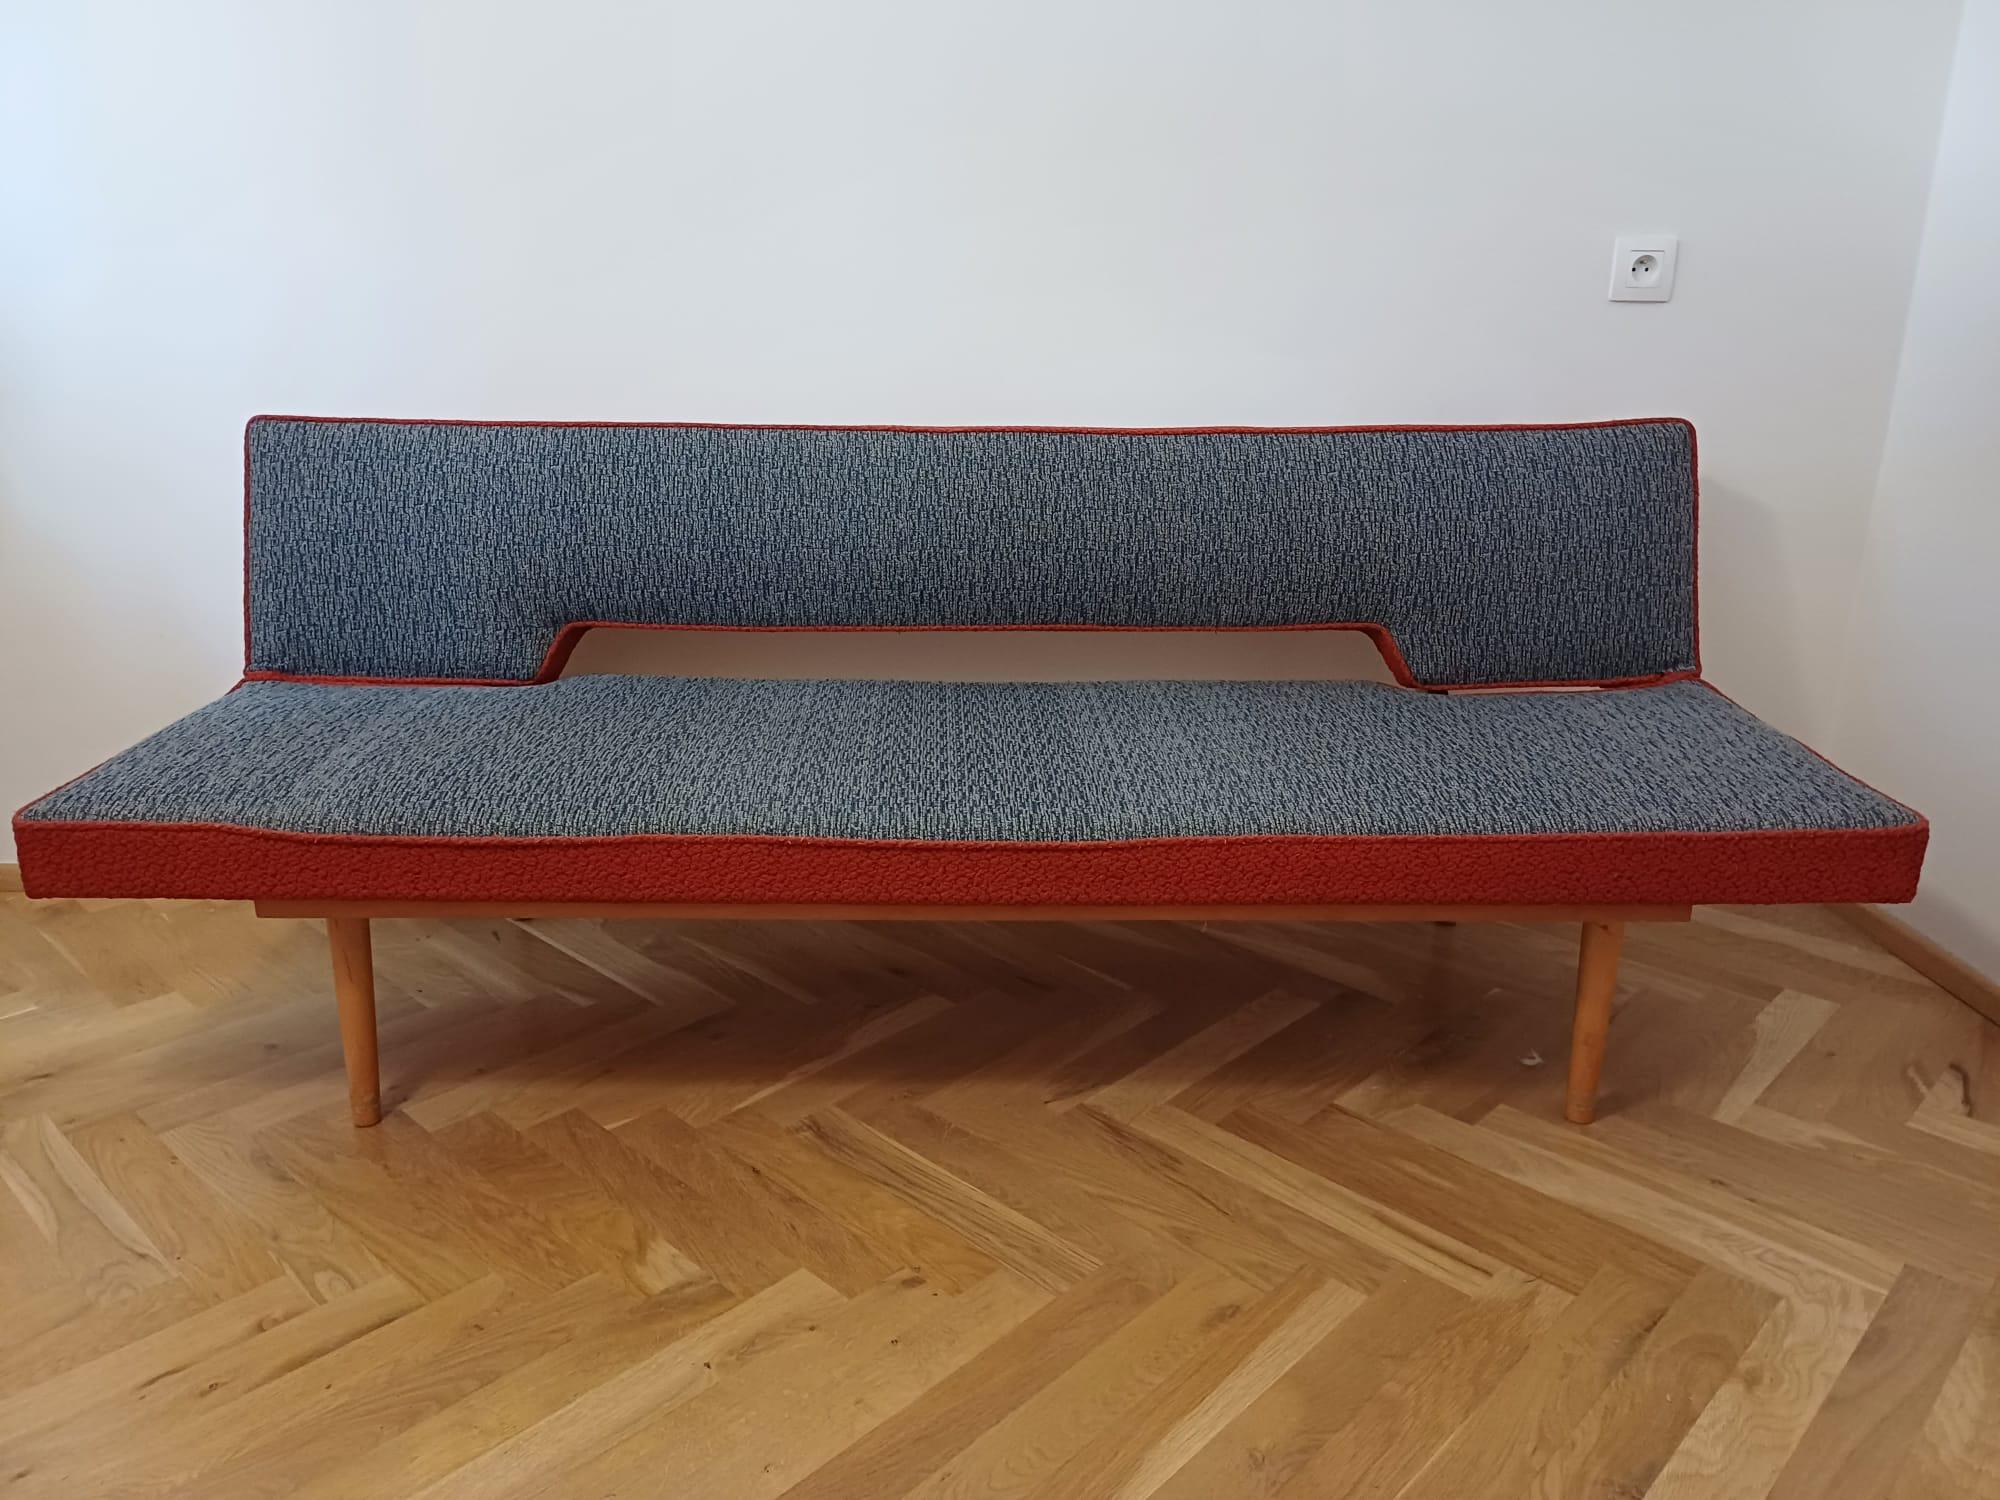 - very iconic sofa 
- adjustable
- confortable
- rare colored